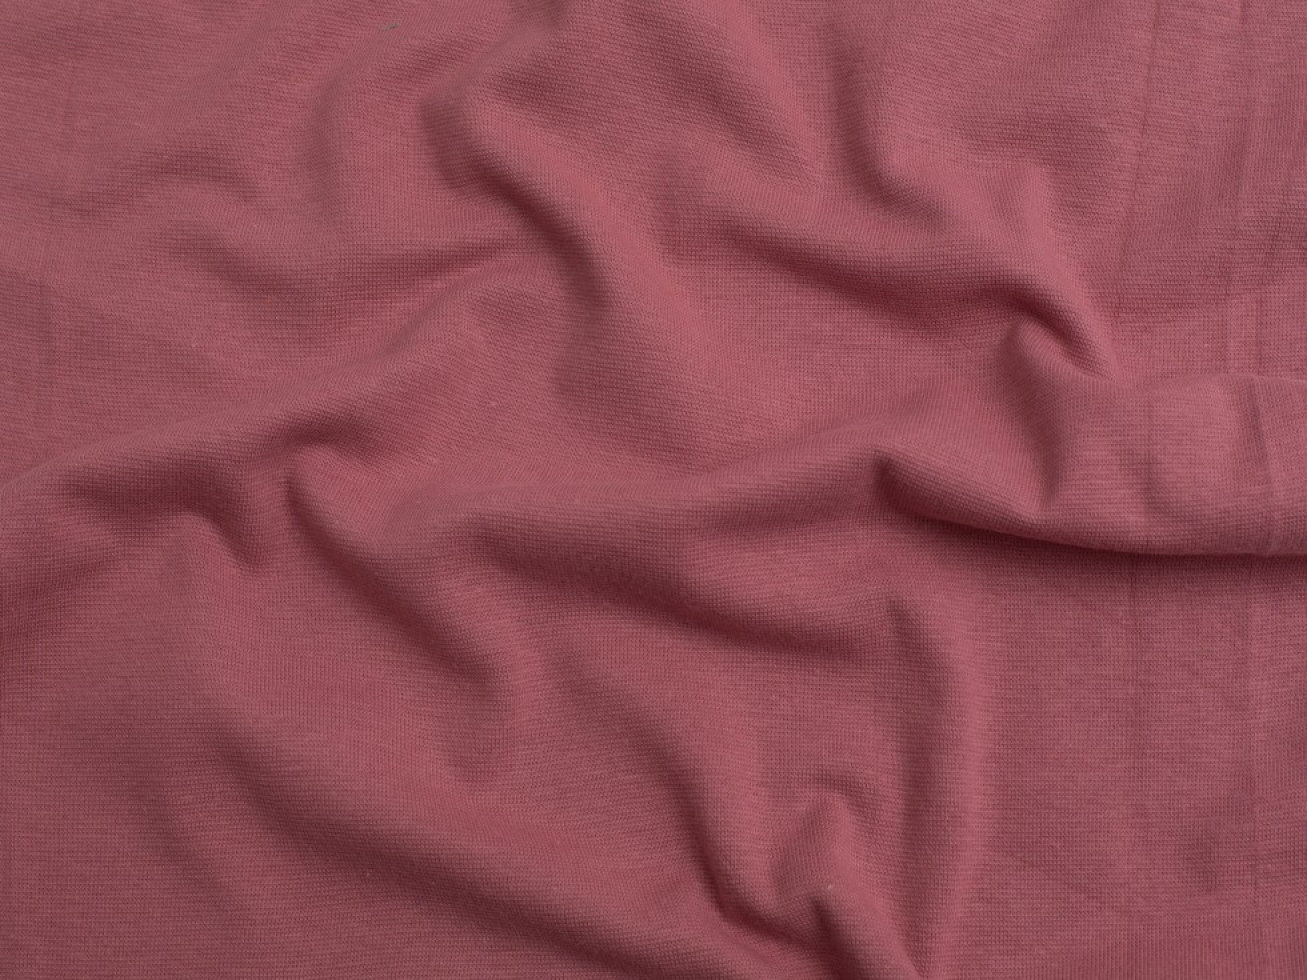 Organic Cotton Tubular Ribbing Fabric in Peachy Pink